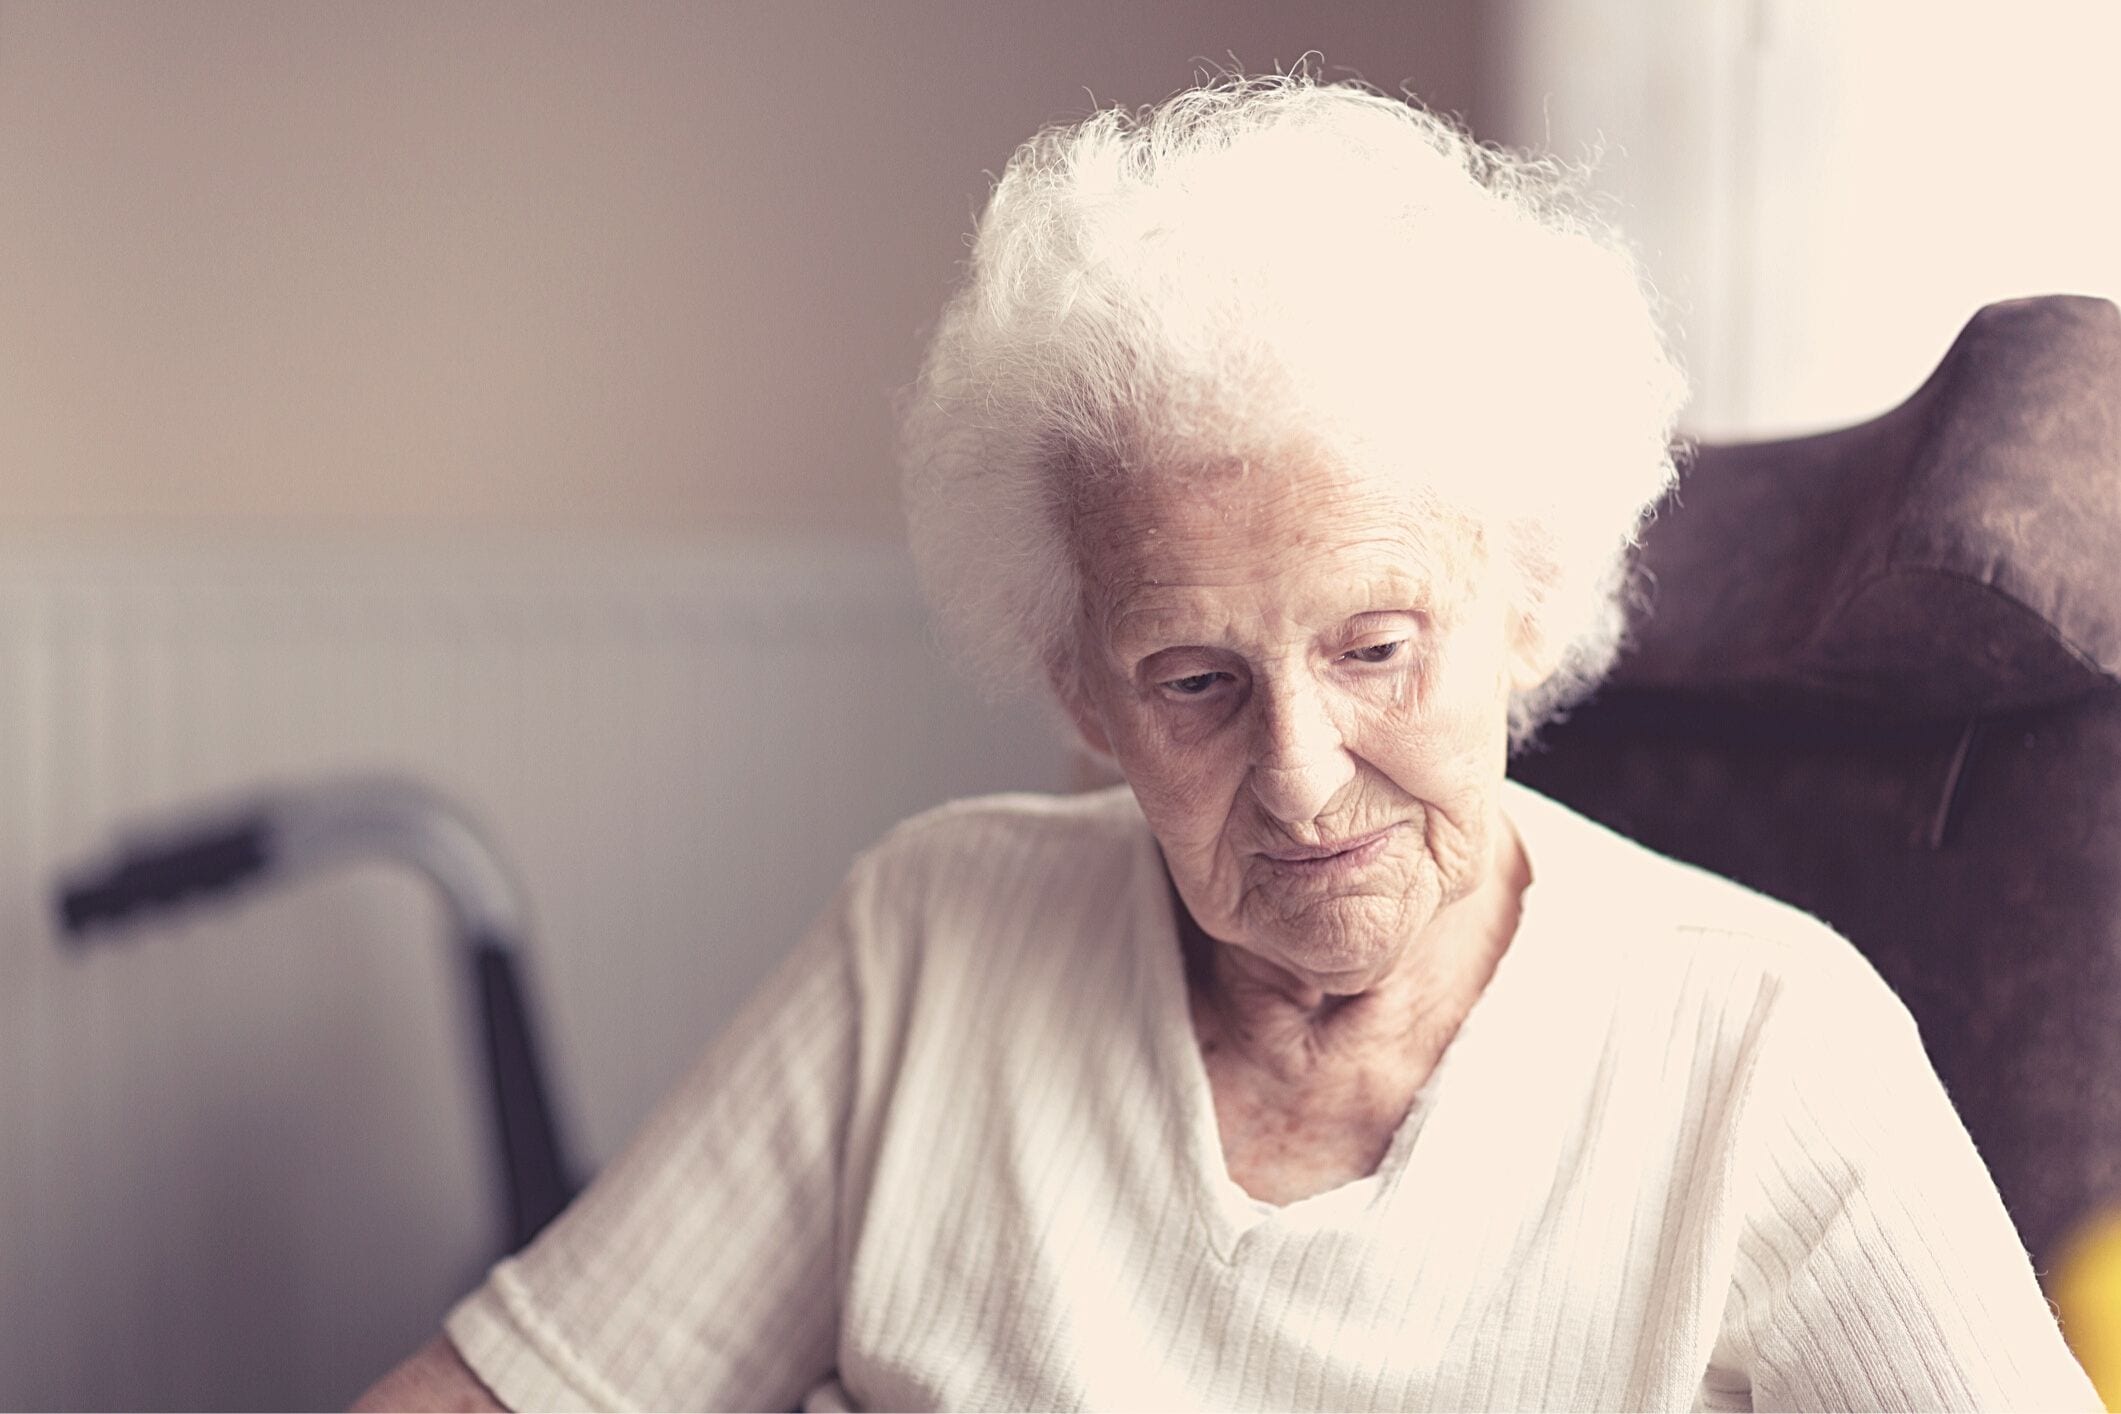 Sad senior woman in her 90s